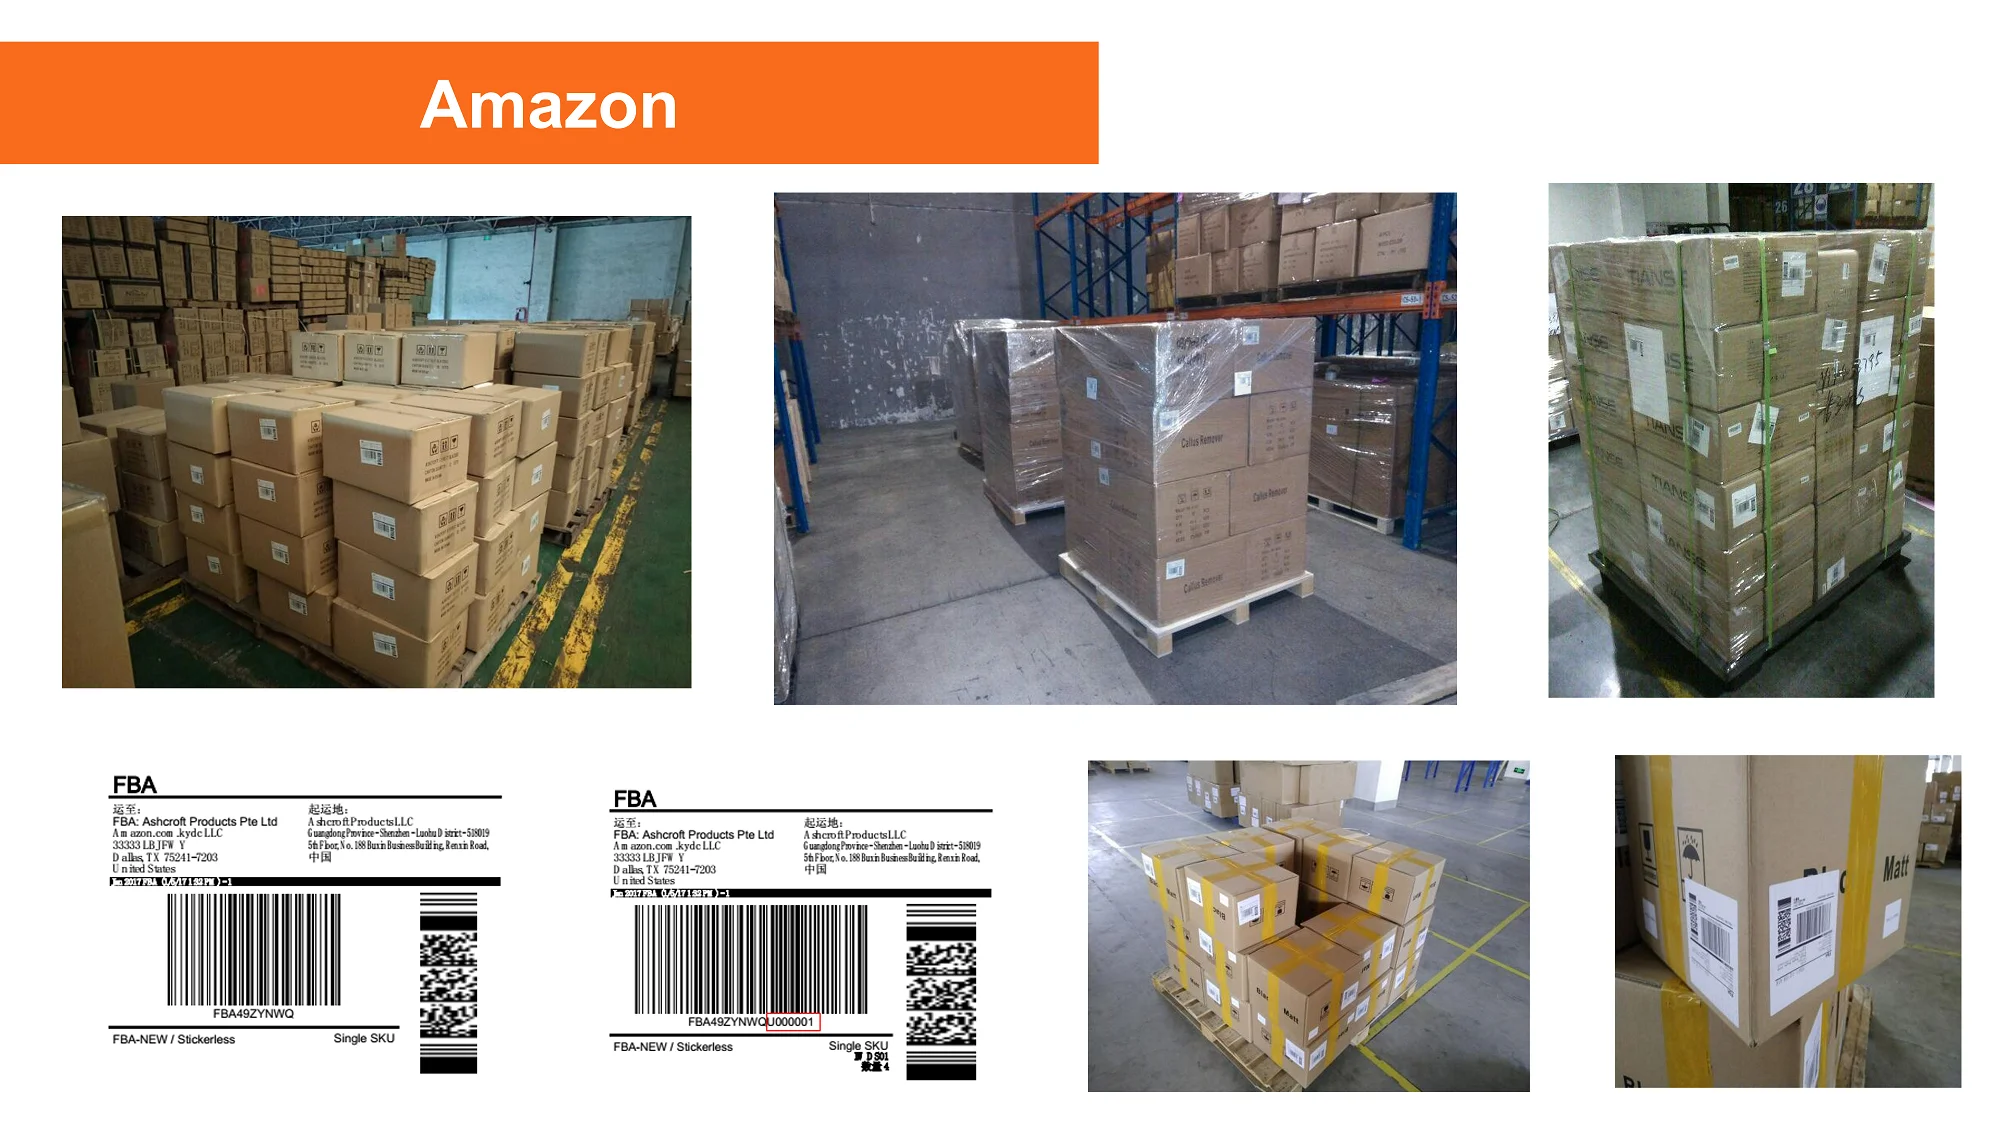 Shenzhen freight forwarder air cargo shipping DDU DDP shipping China to USA